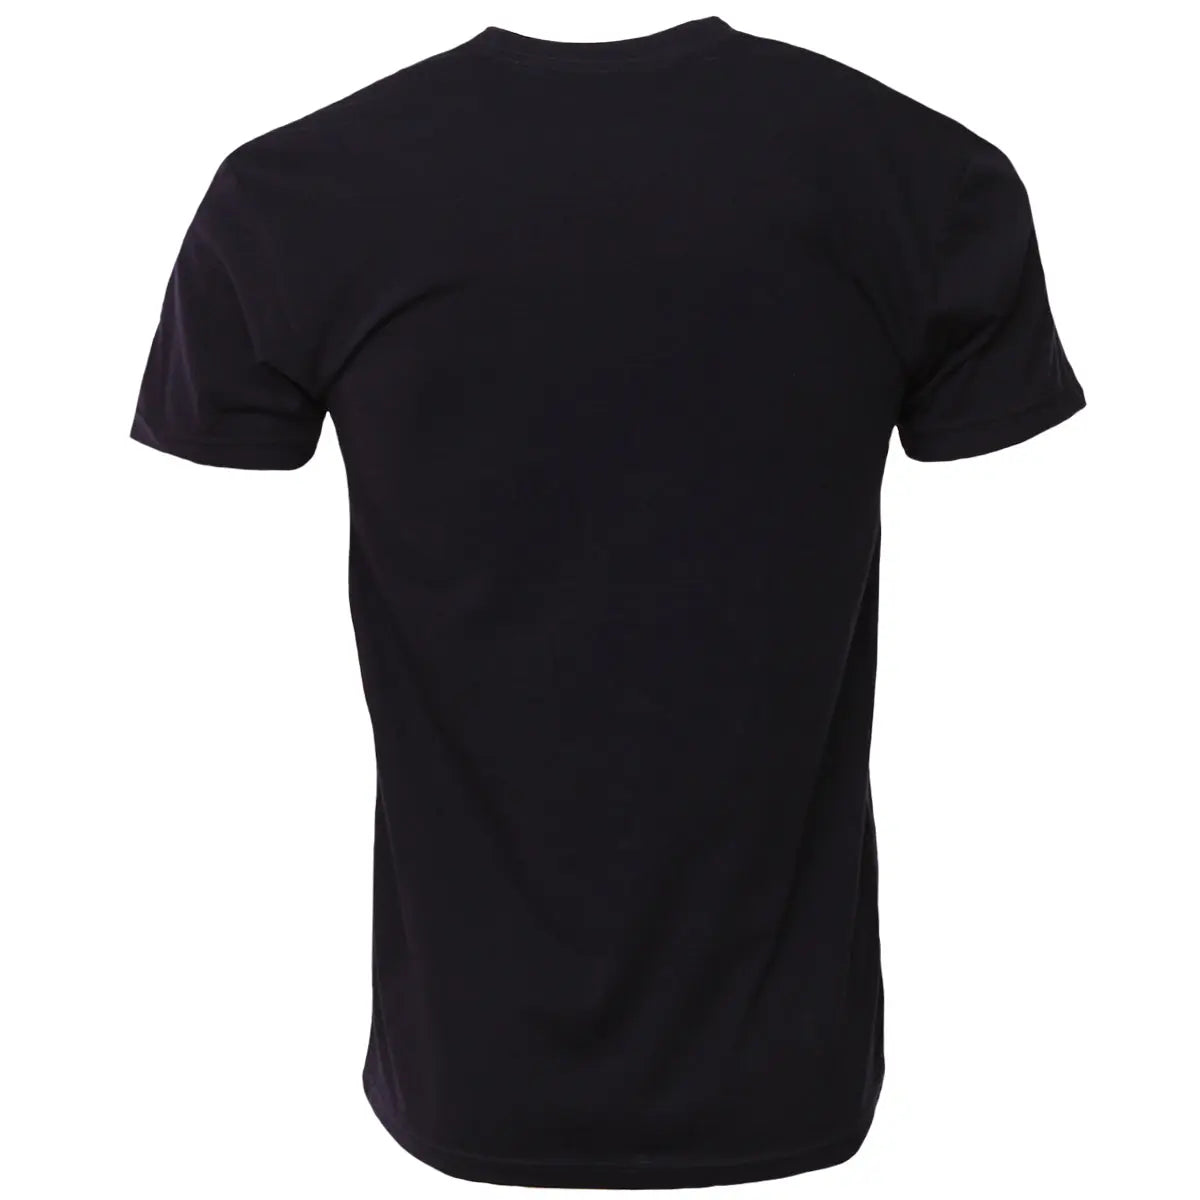 Forza Sports "Awakening" MMA T-Shirt - Black Forza Sports